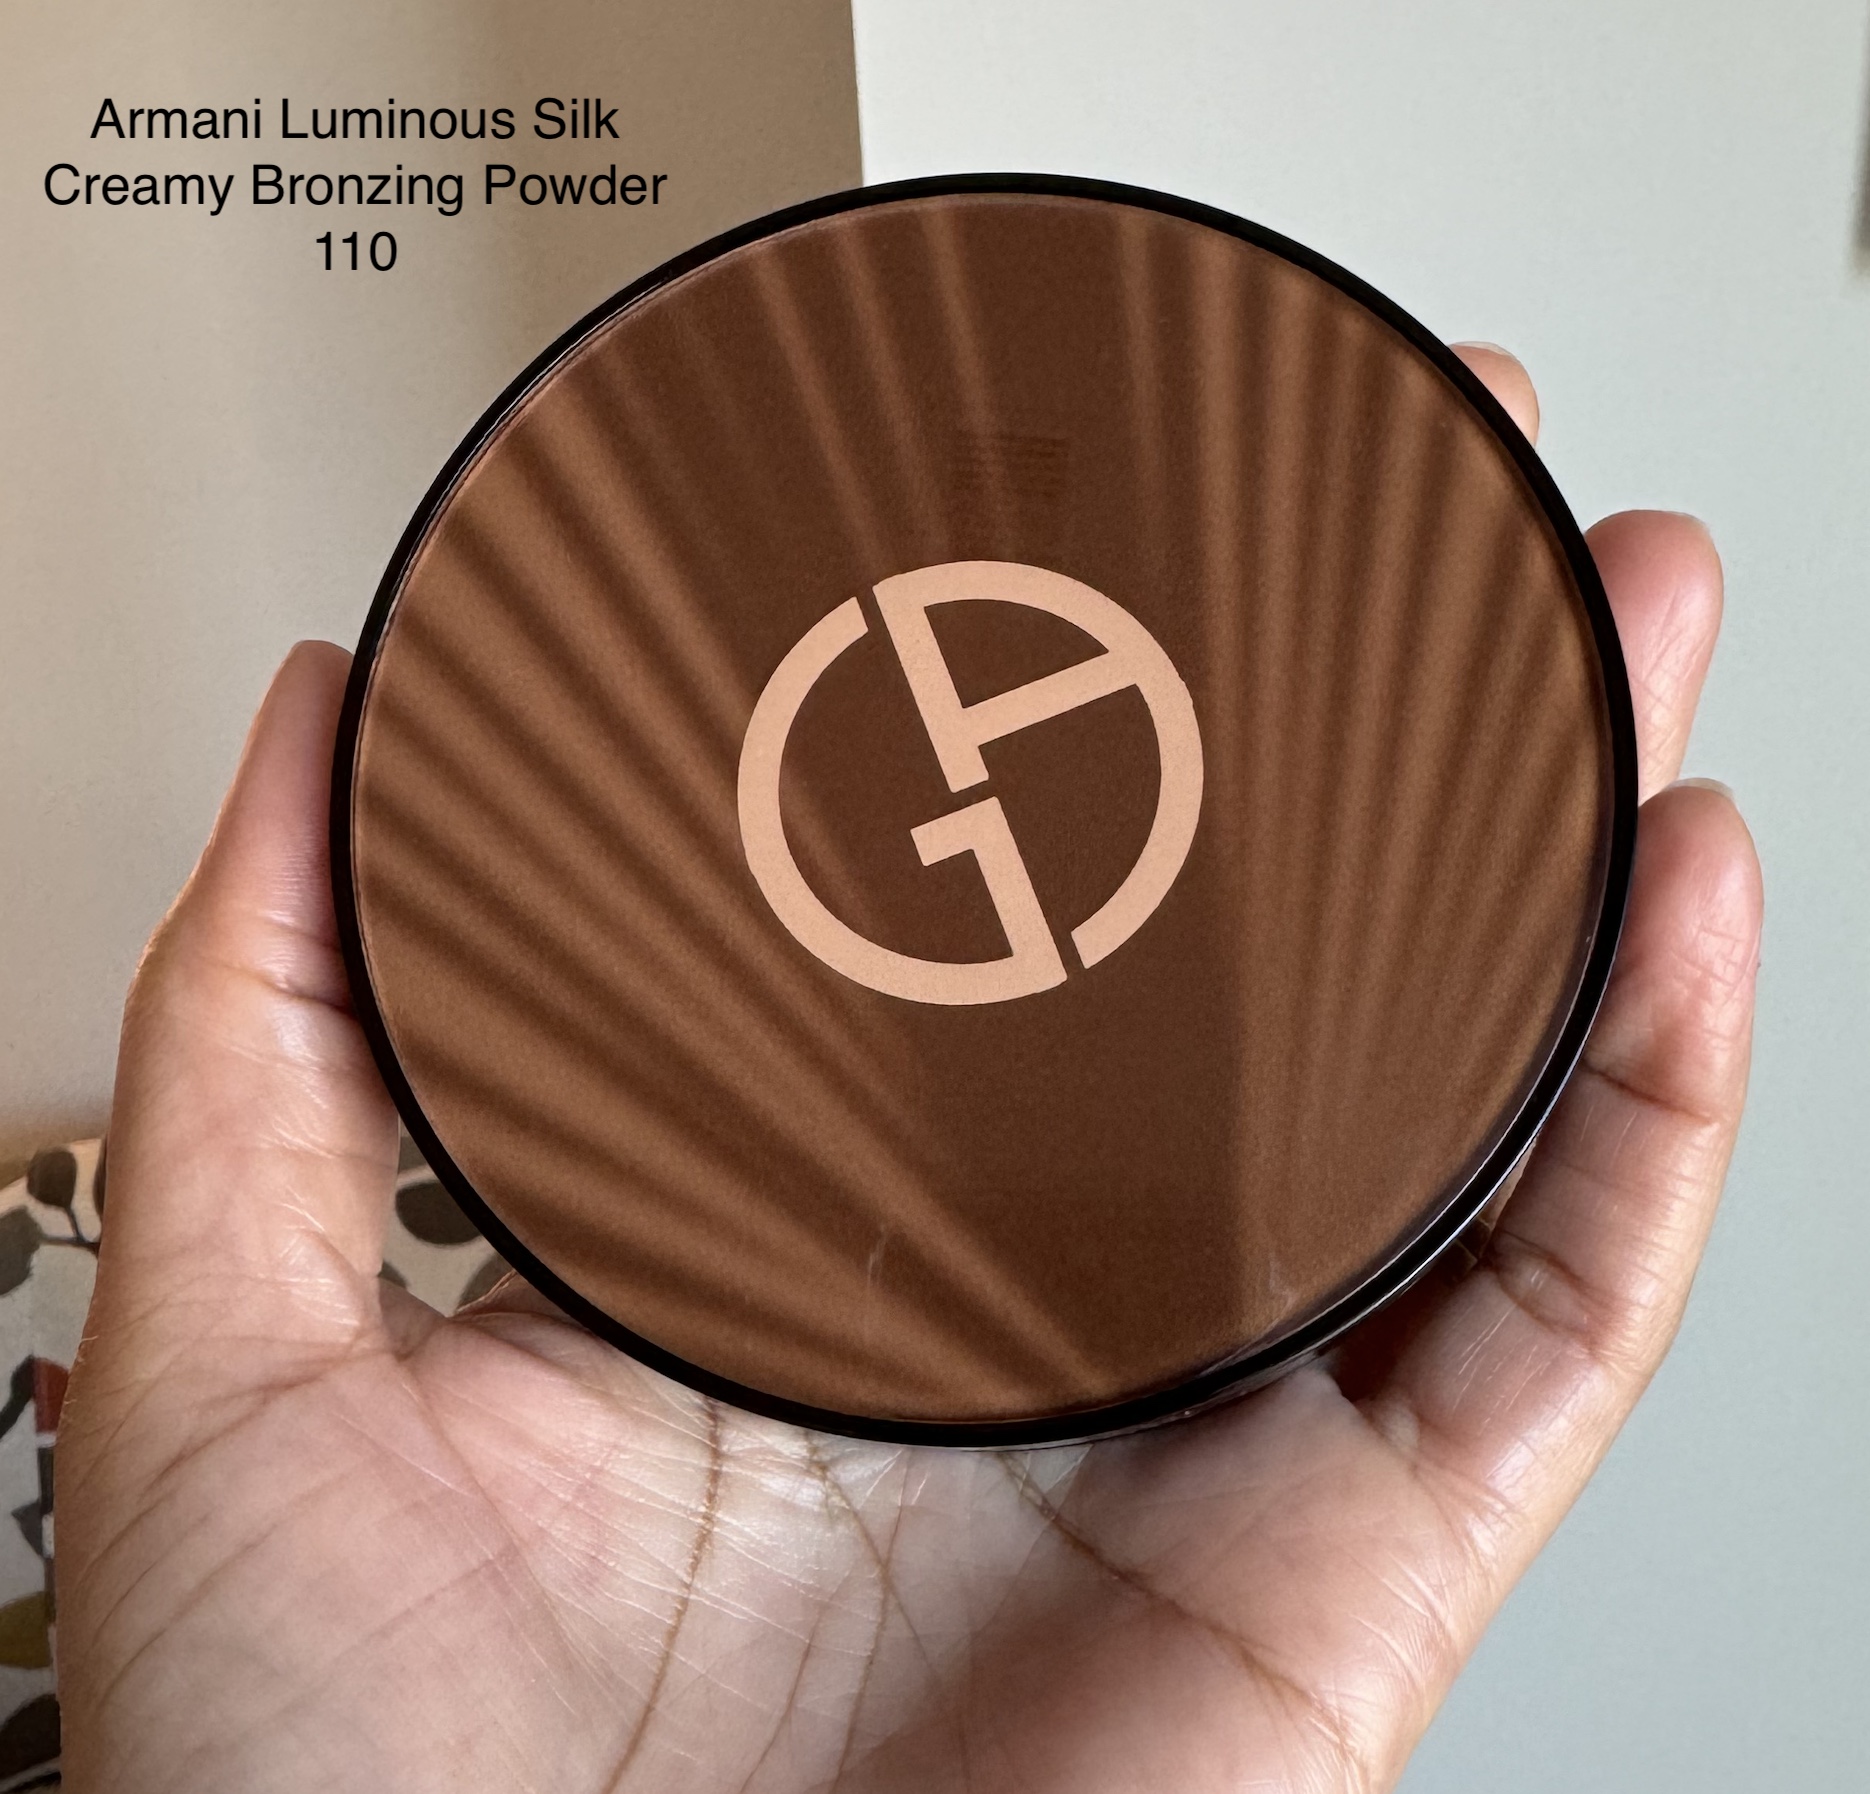 Armani Luminous Silk Creamy Bronzer Powder 110 Swatch